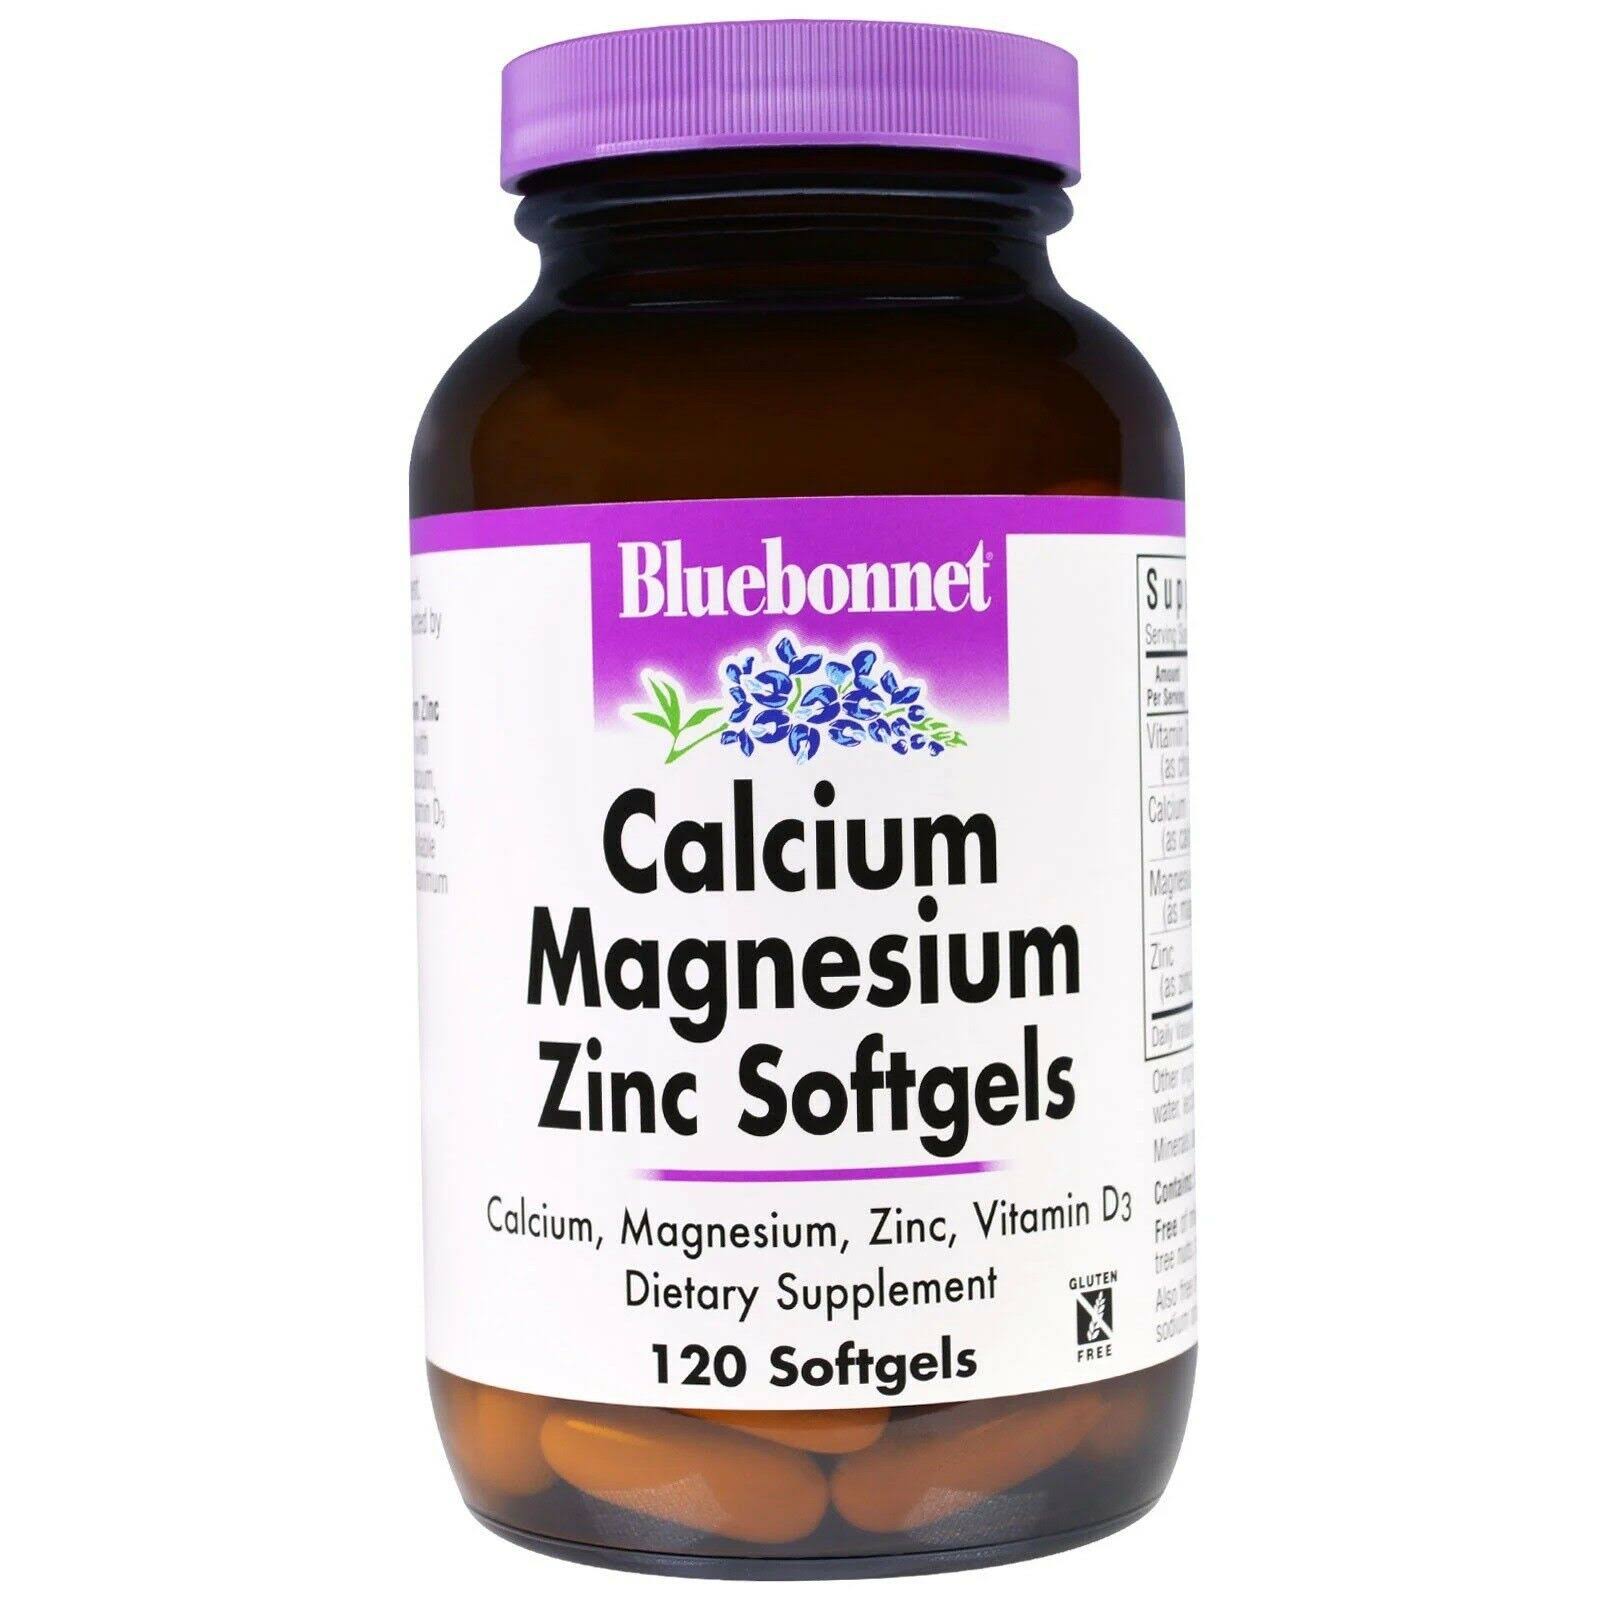 BlueBonnet Calcium Magnesium Zinc Softgels